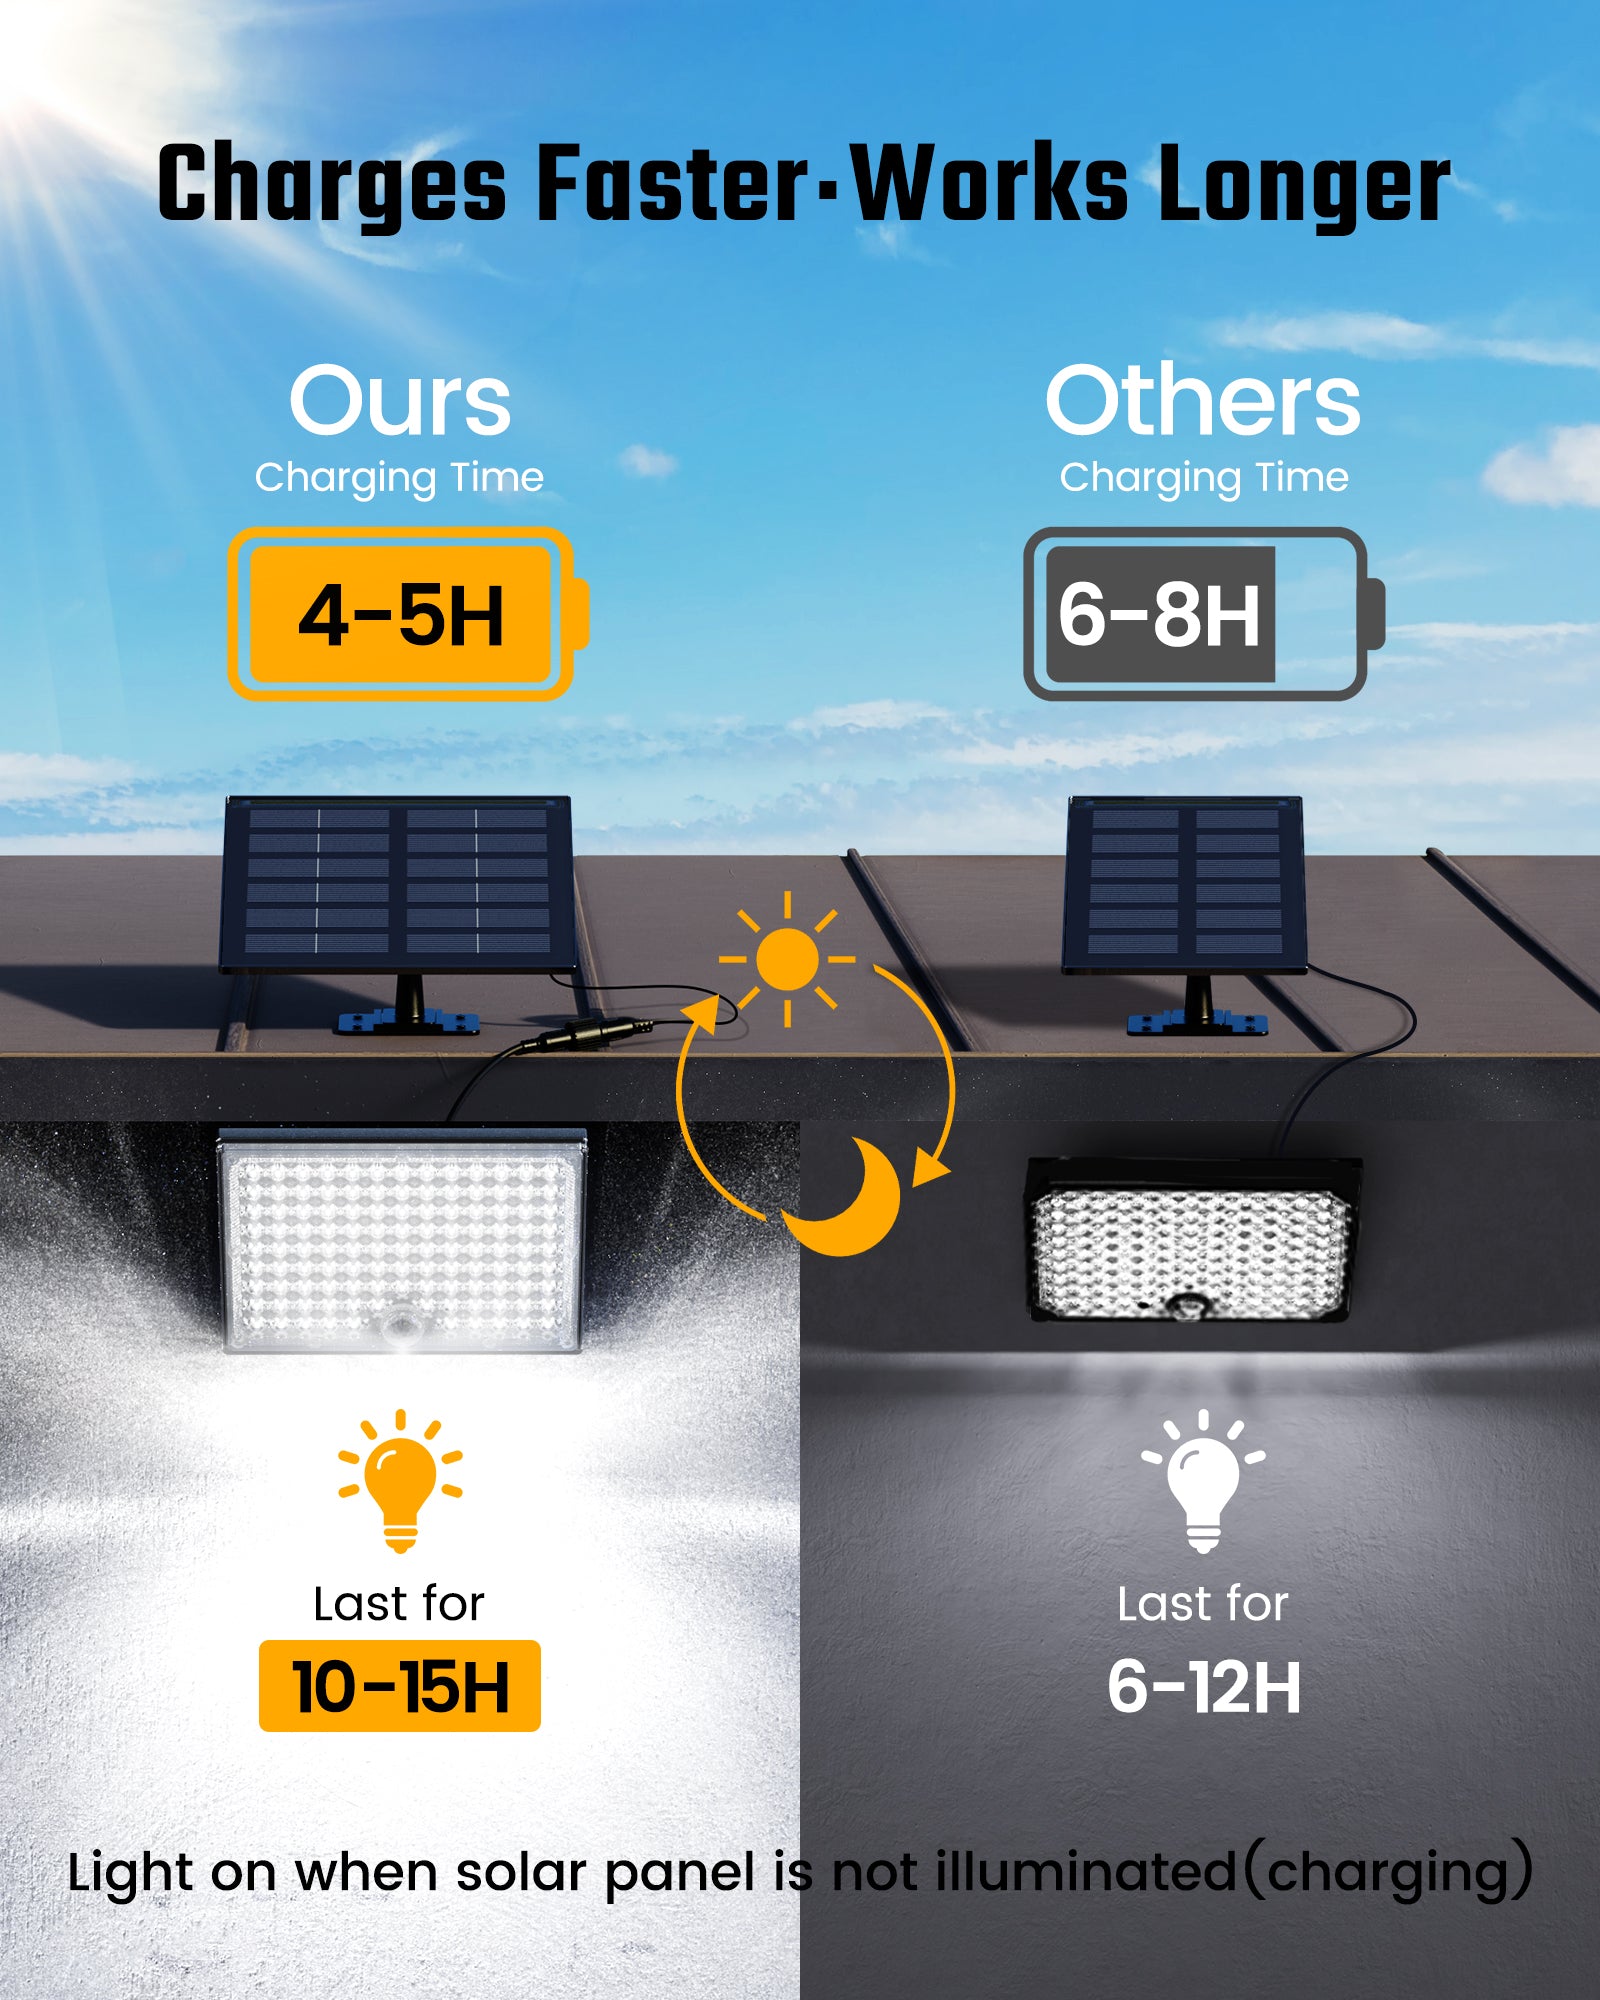 SUPERDANNY Solar Lights with 113 Bright LEDs 7000K Motion Sensor 2 Pack